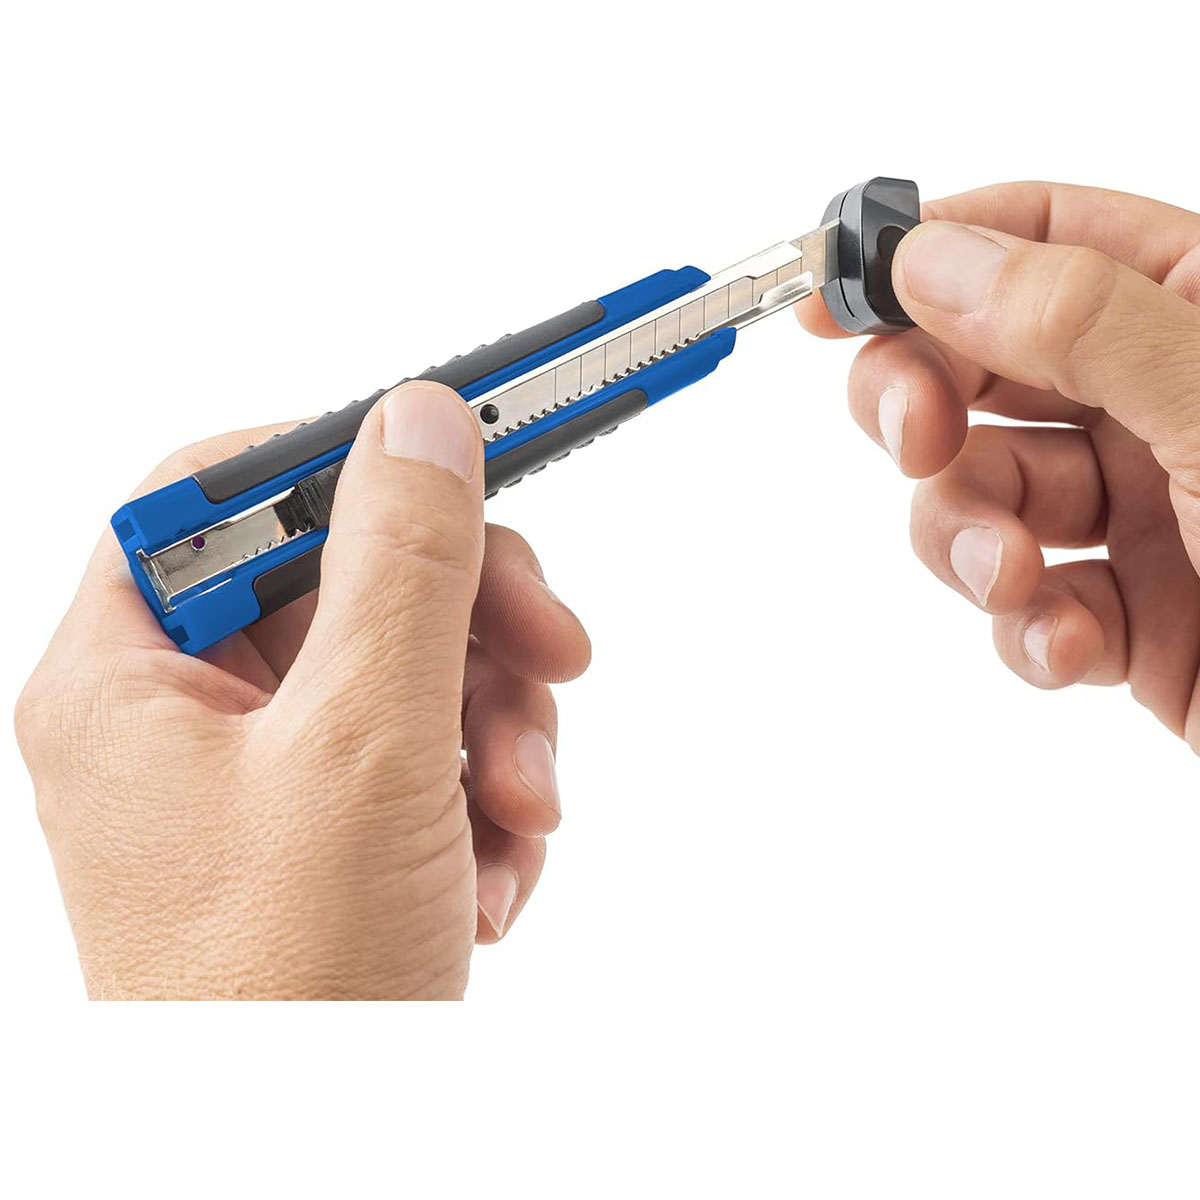 DAHLE 10870 Allround cutter knife 9 mm incl. 2 blades - blue/black